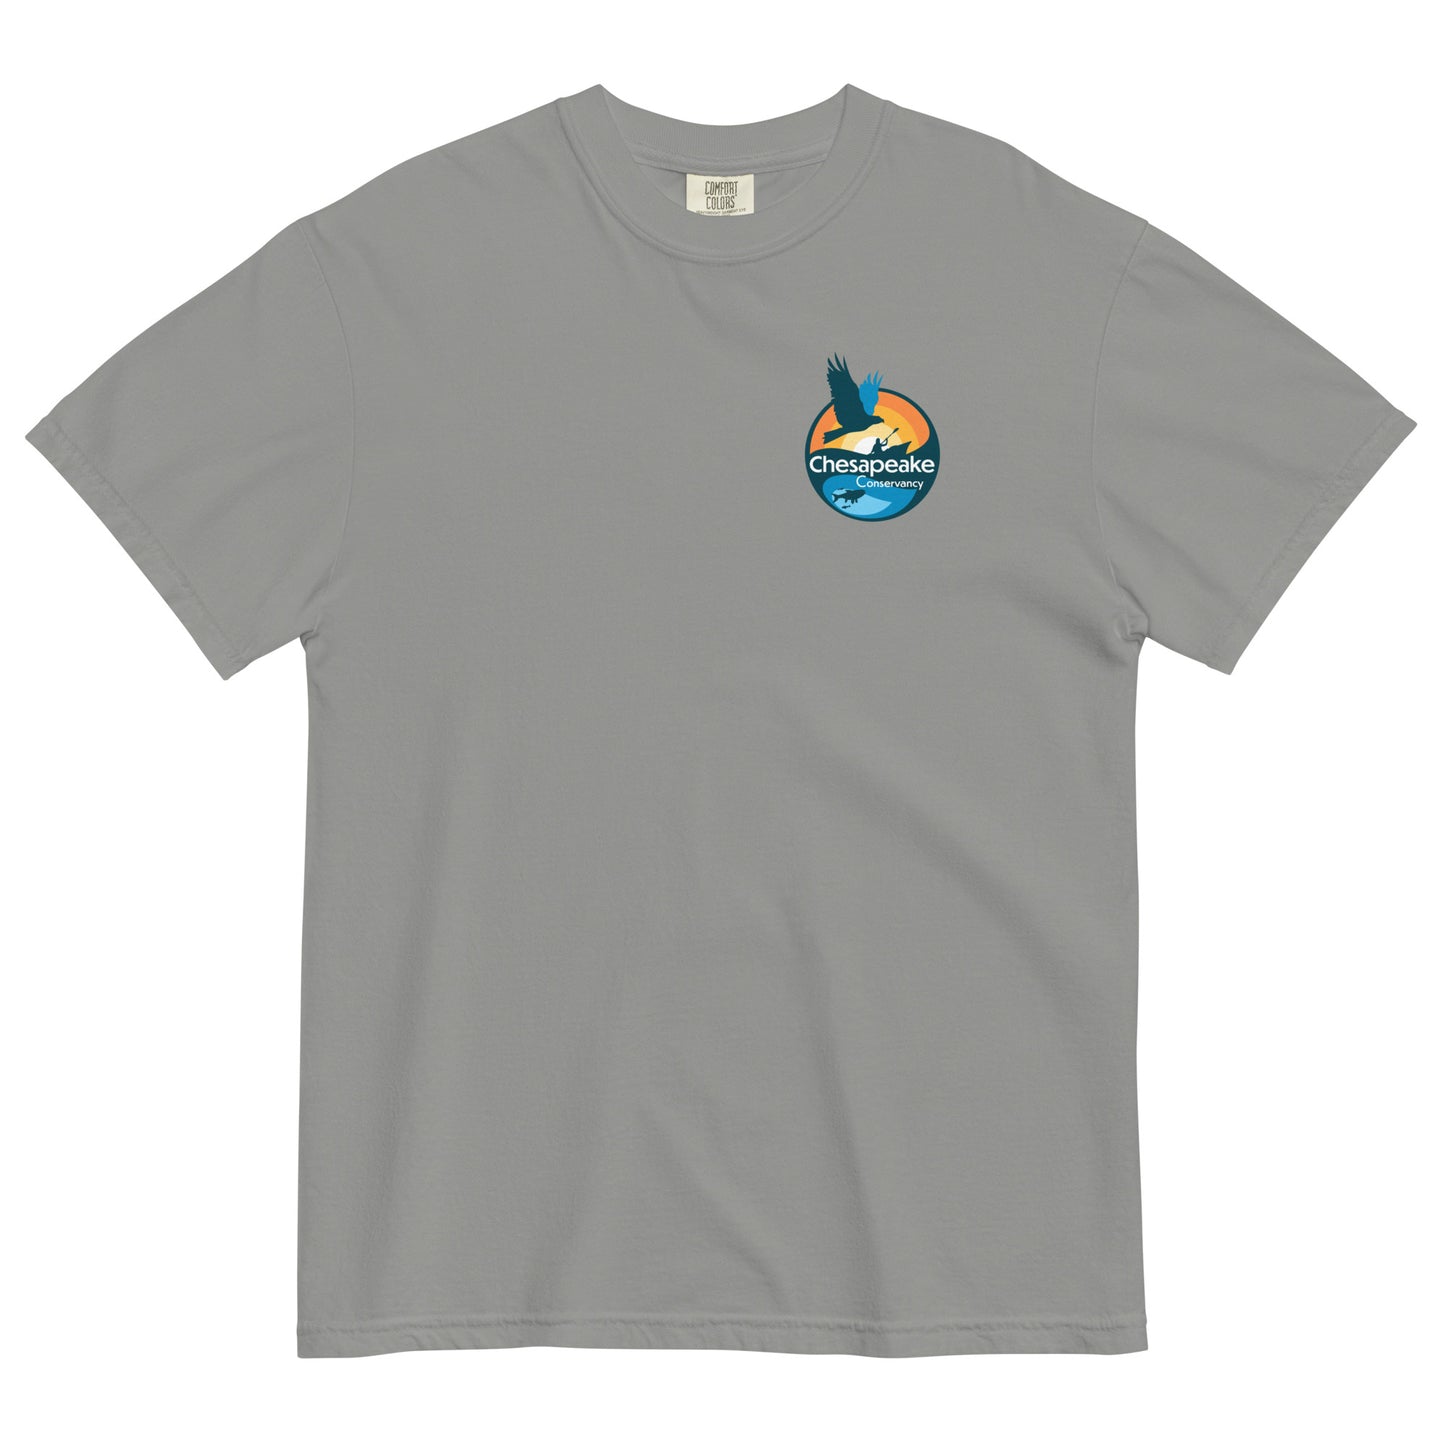 Mallows Bay - Heavyweight Comfort Colors - Unisex T-shirt